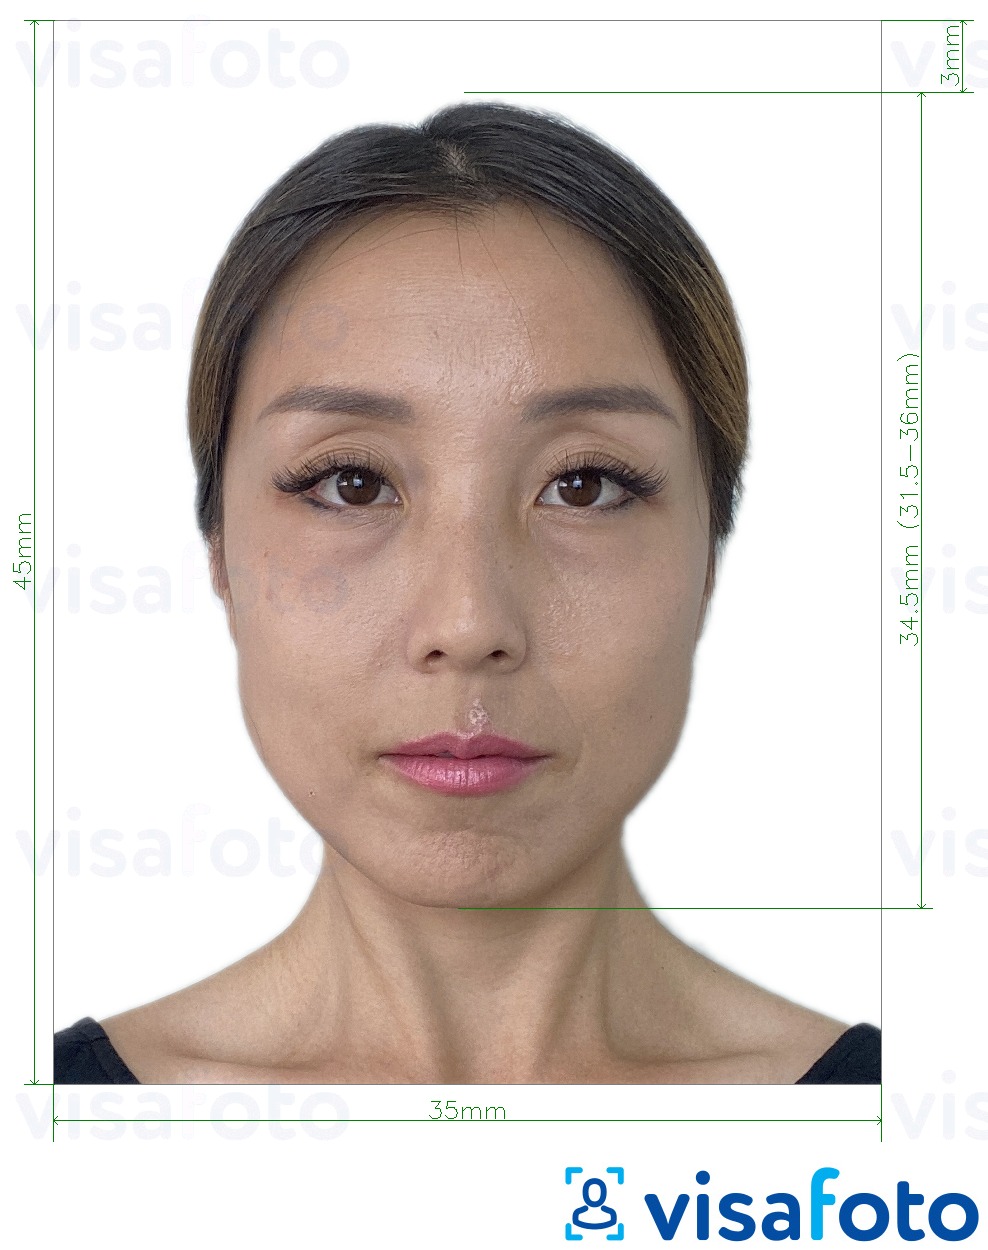 Shembulli i fotos per Tajvani Visa 35x45 mm (3.5x4.5 cm) me specifikimet ekzakte